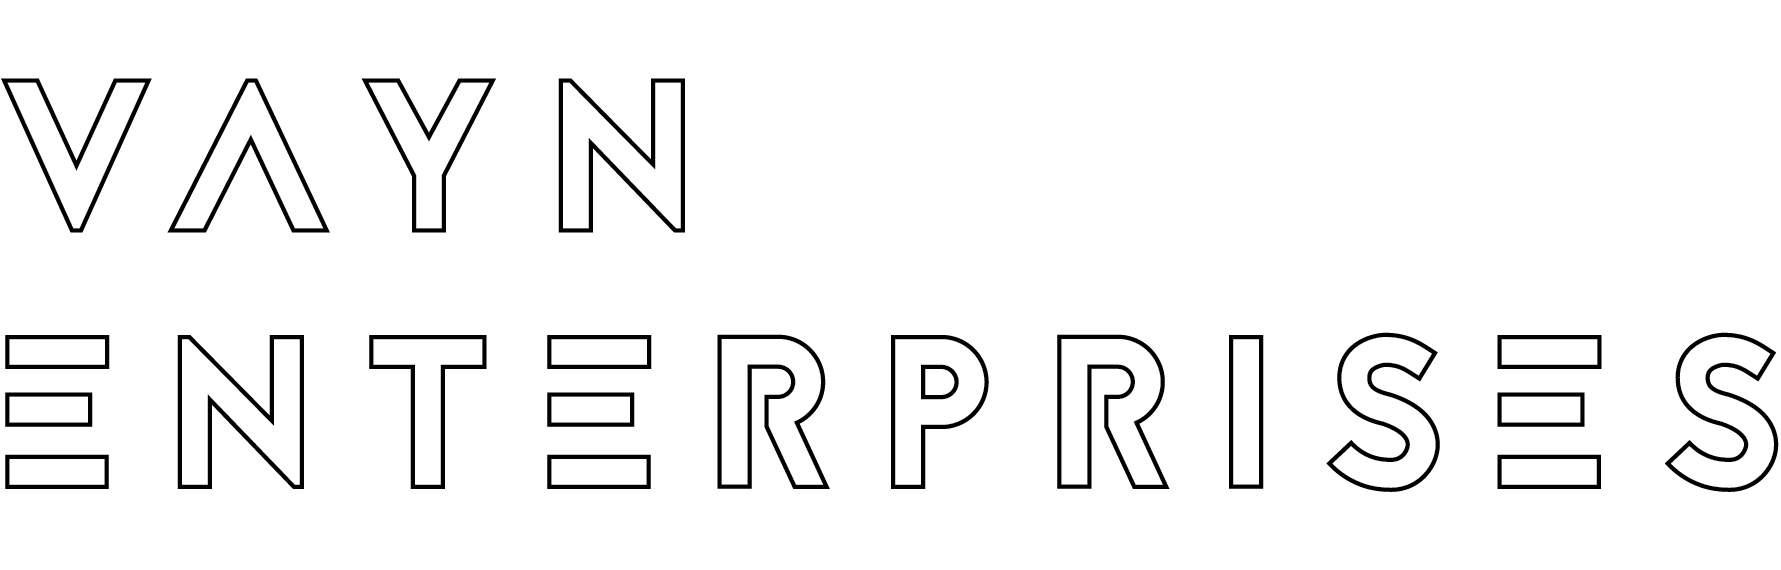 Vayn Enterprises